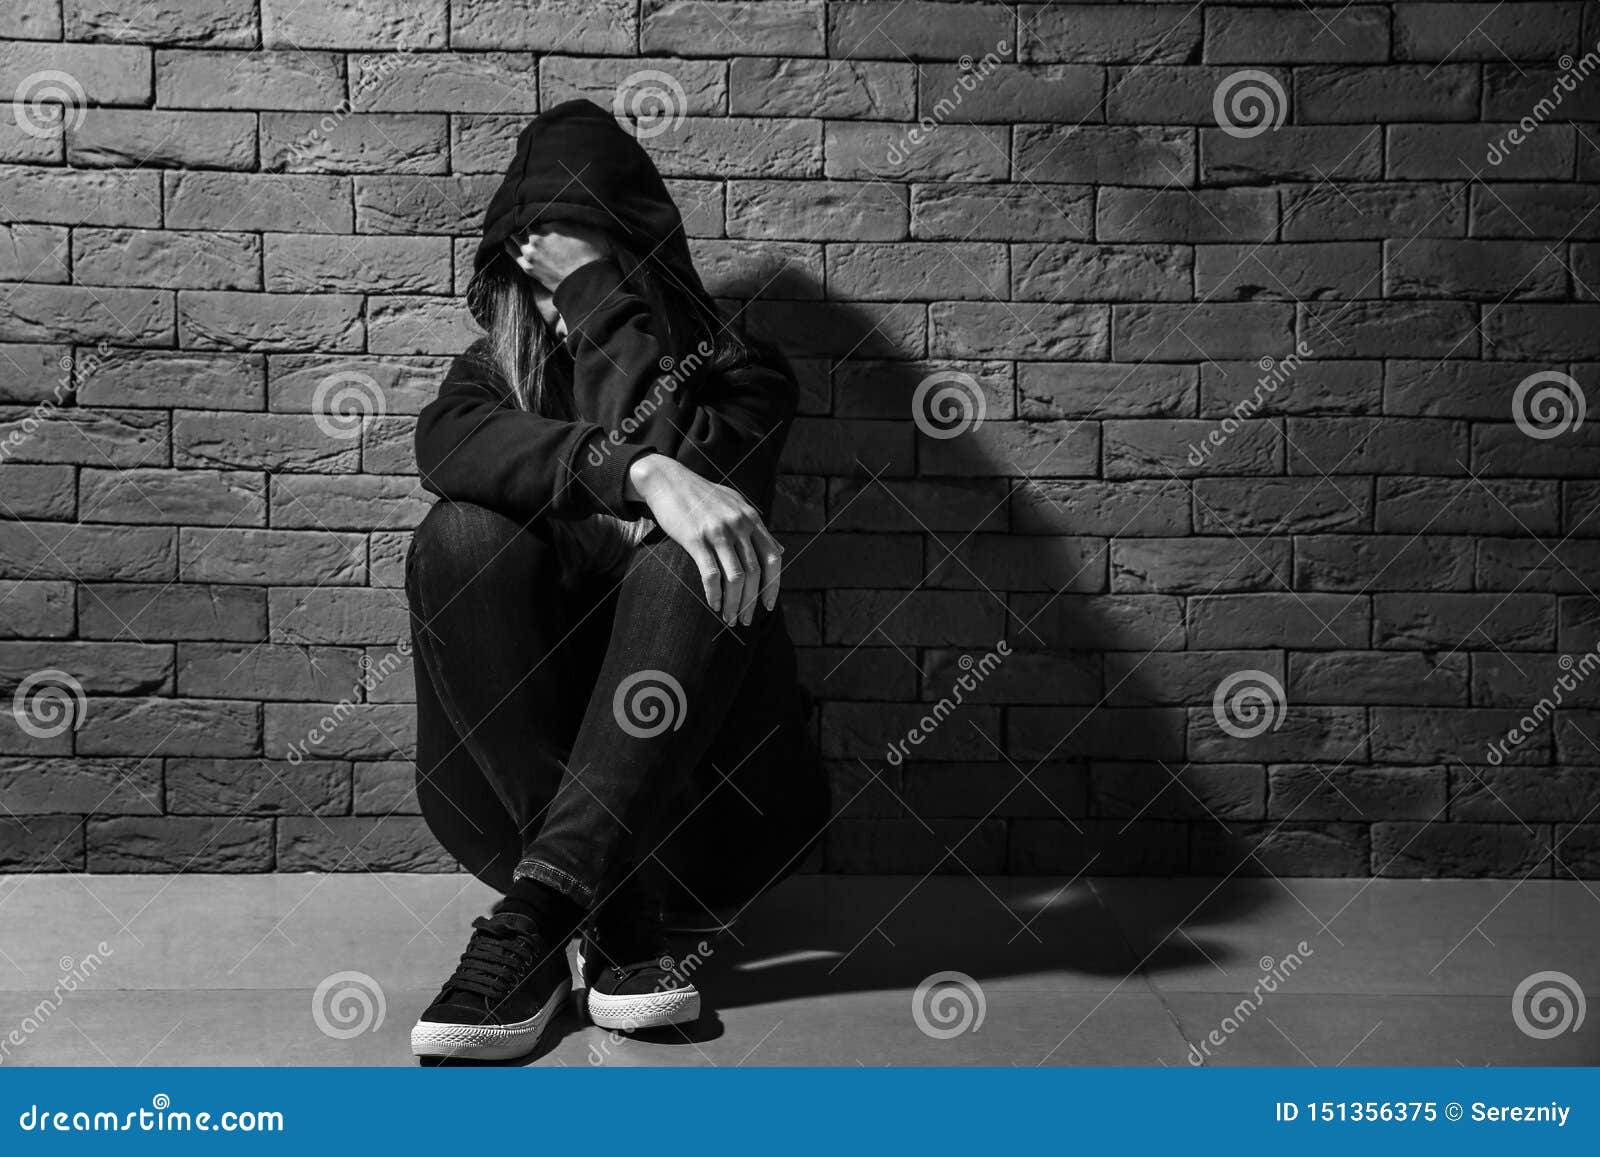 depressed female junkie near brick wall. concept of addiction